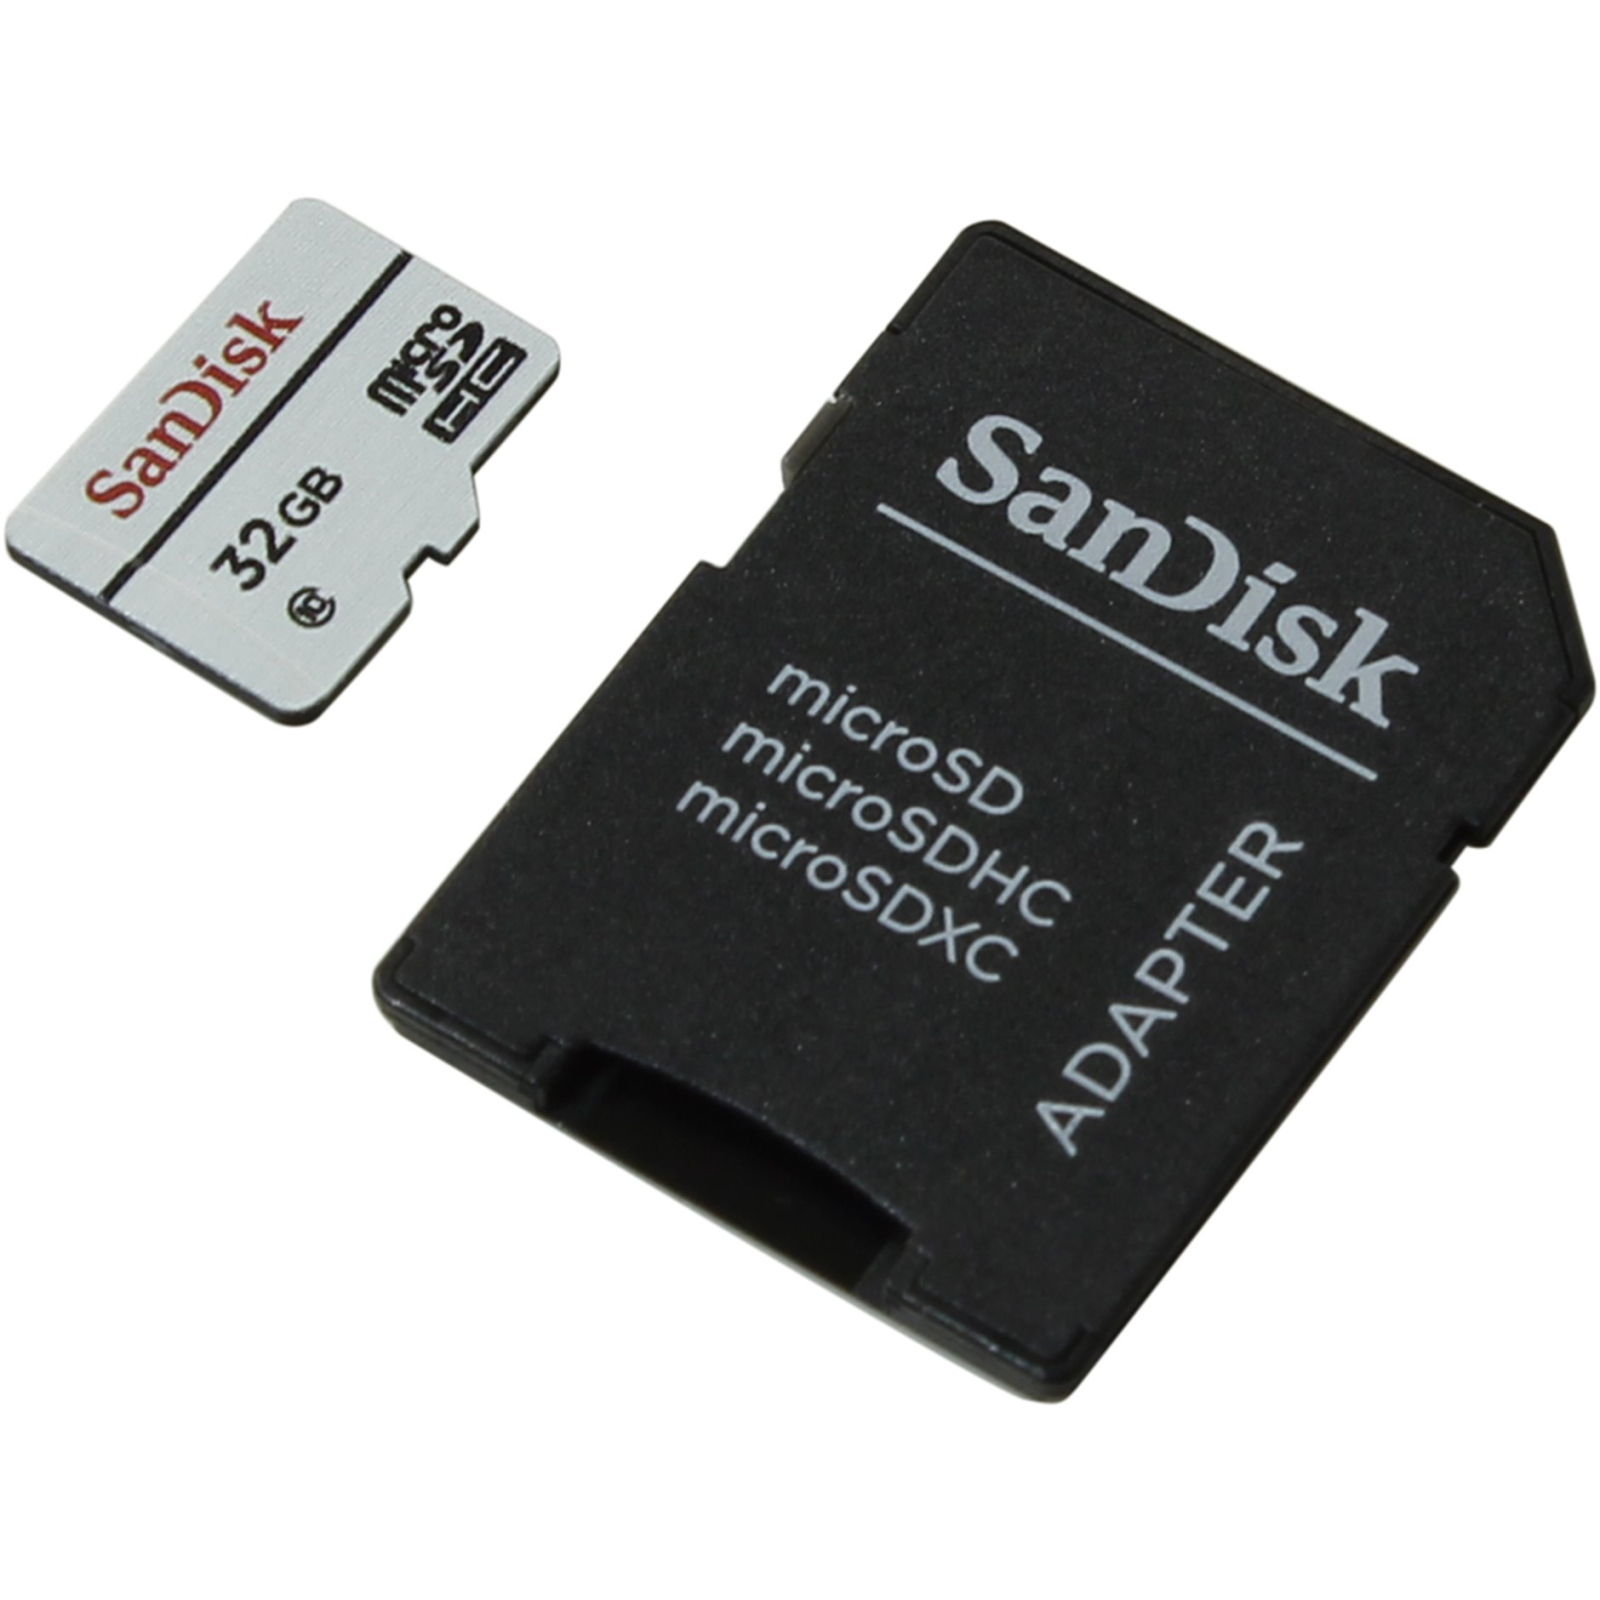 Карта памяти SanDisk 32GB microSDHC class 10 High Endurance Video Monitoring (SDSDQQ-032G-G46A) изображение 2